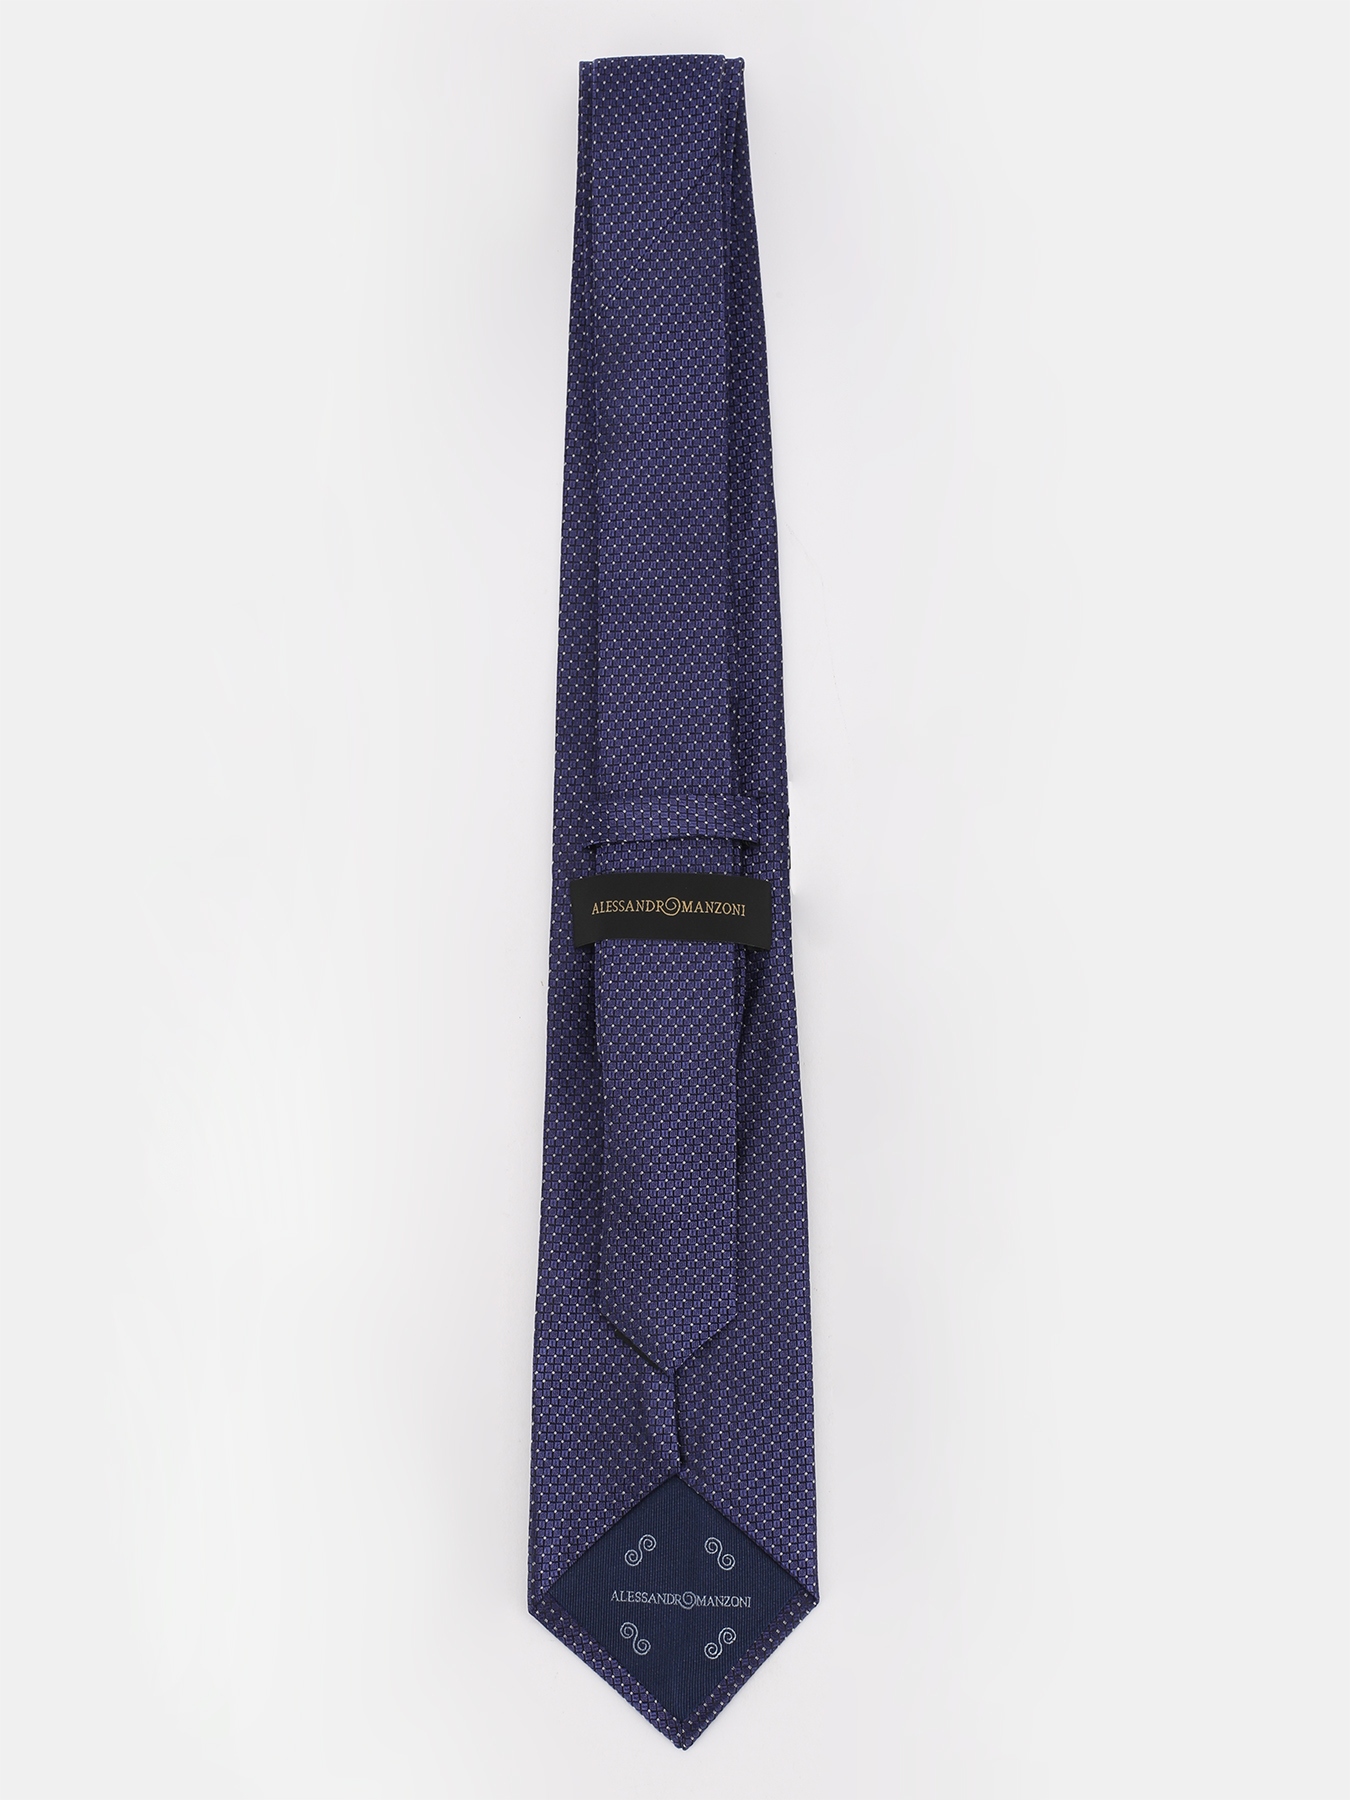 Alessandro Manzoni Шелковый галстук с узорами 324192-185 Фото 2